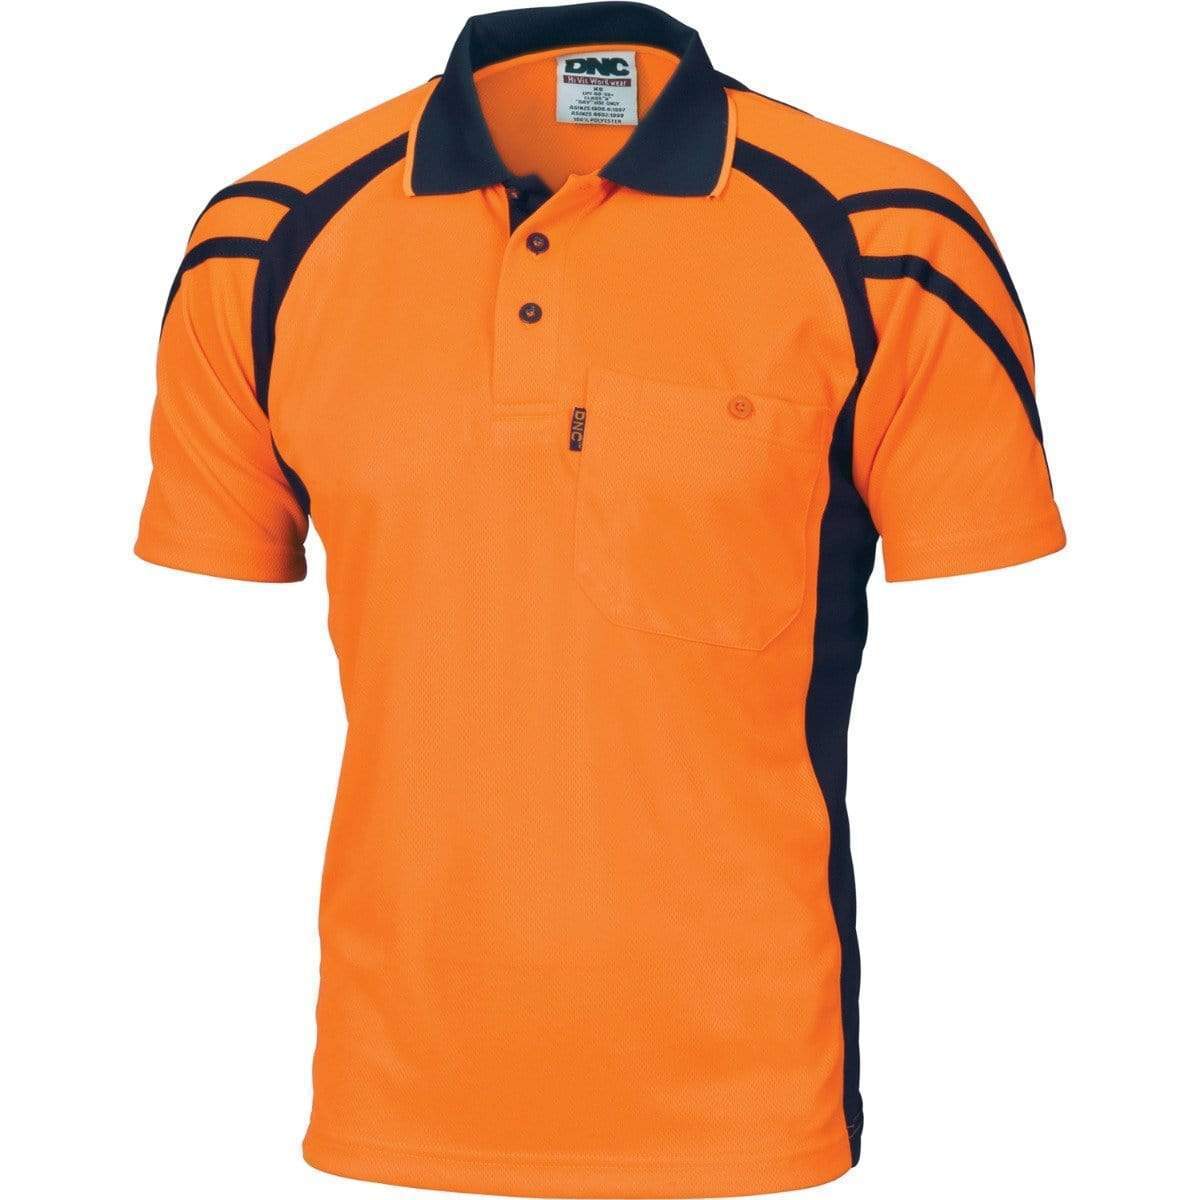 Dnc Workwear Cool Breathe Stripe Panel Short Sleeve Polo Shirt - 3979 Work Wear DNC Workwear Orange/Navy XS 